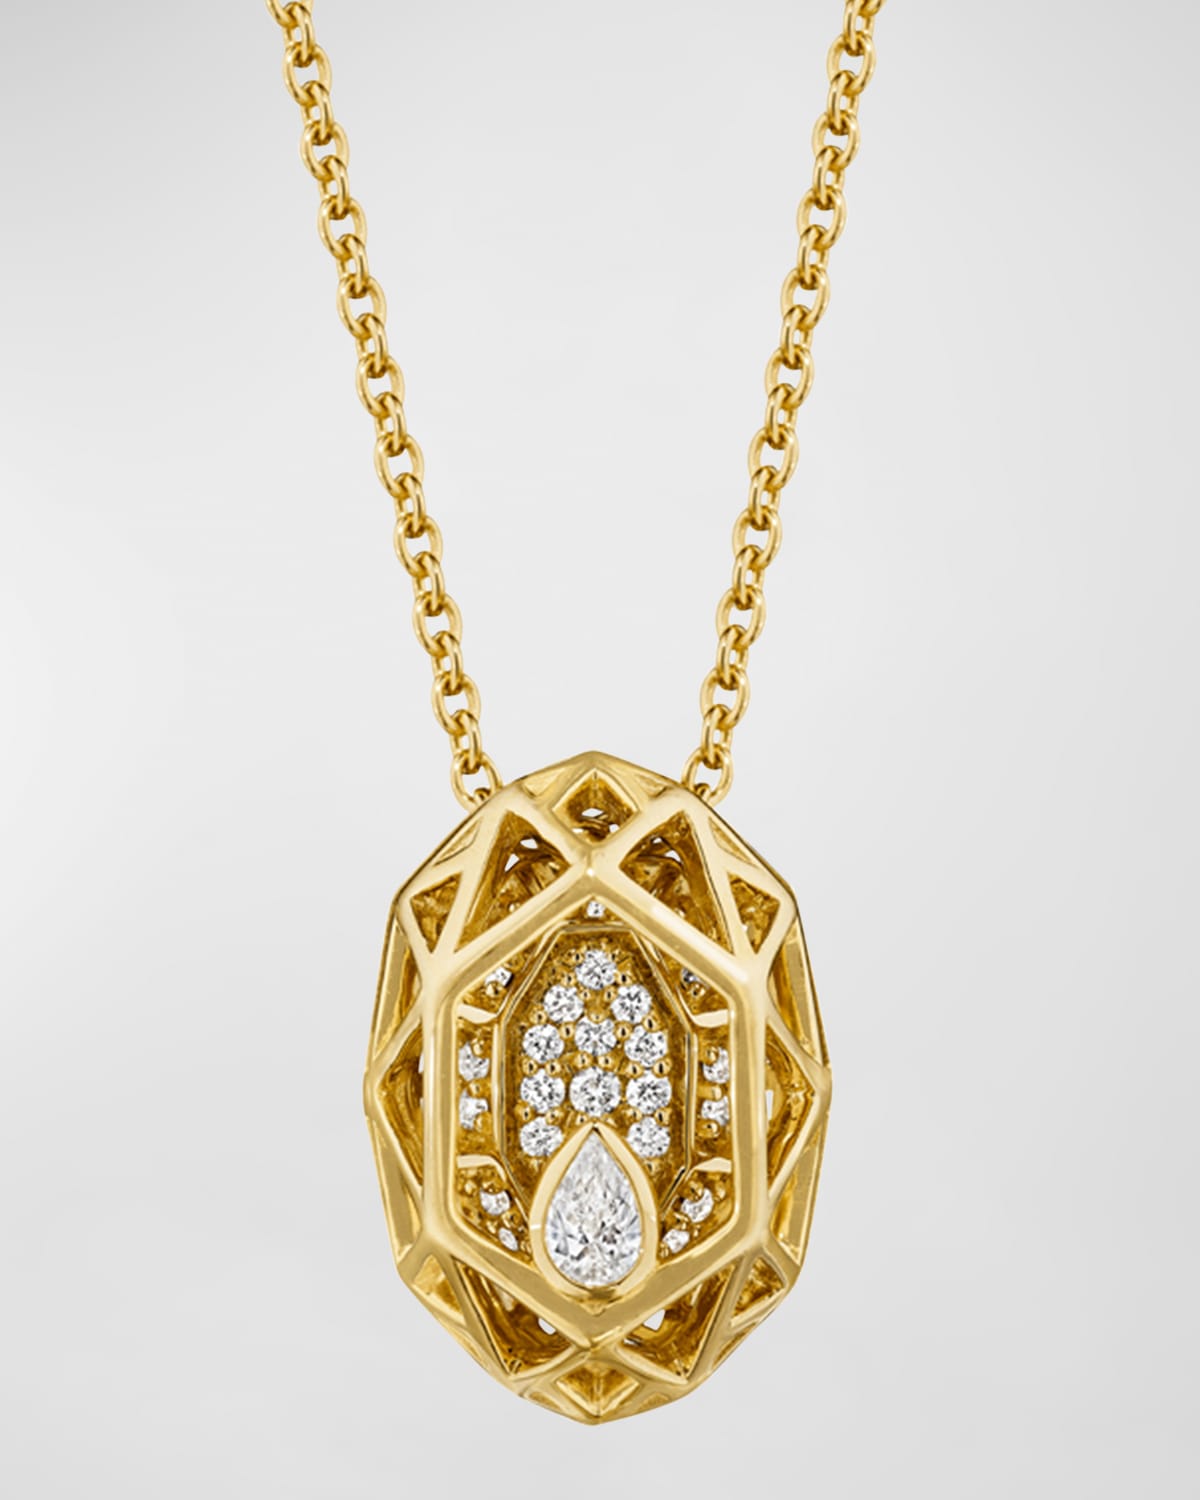 Hueb 18k Estelar White Gold Pendant Necklace With Diamonds, 18"l In Yellow Gold